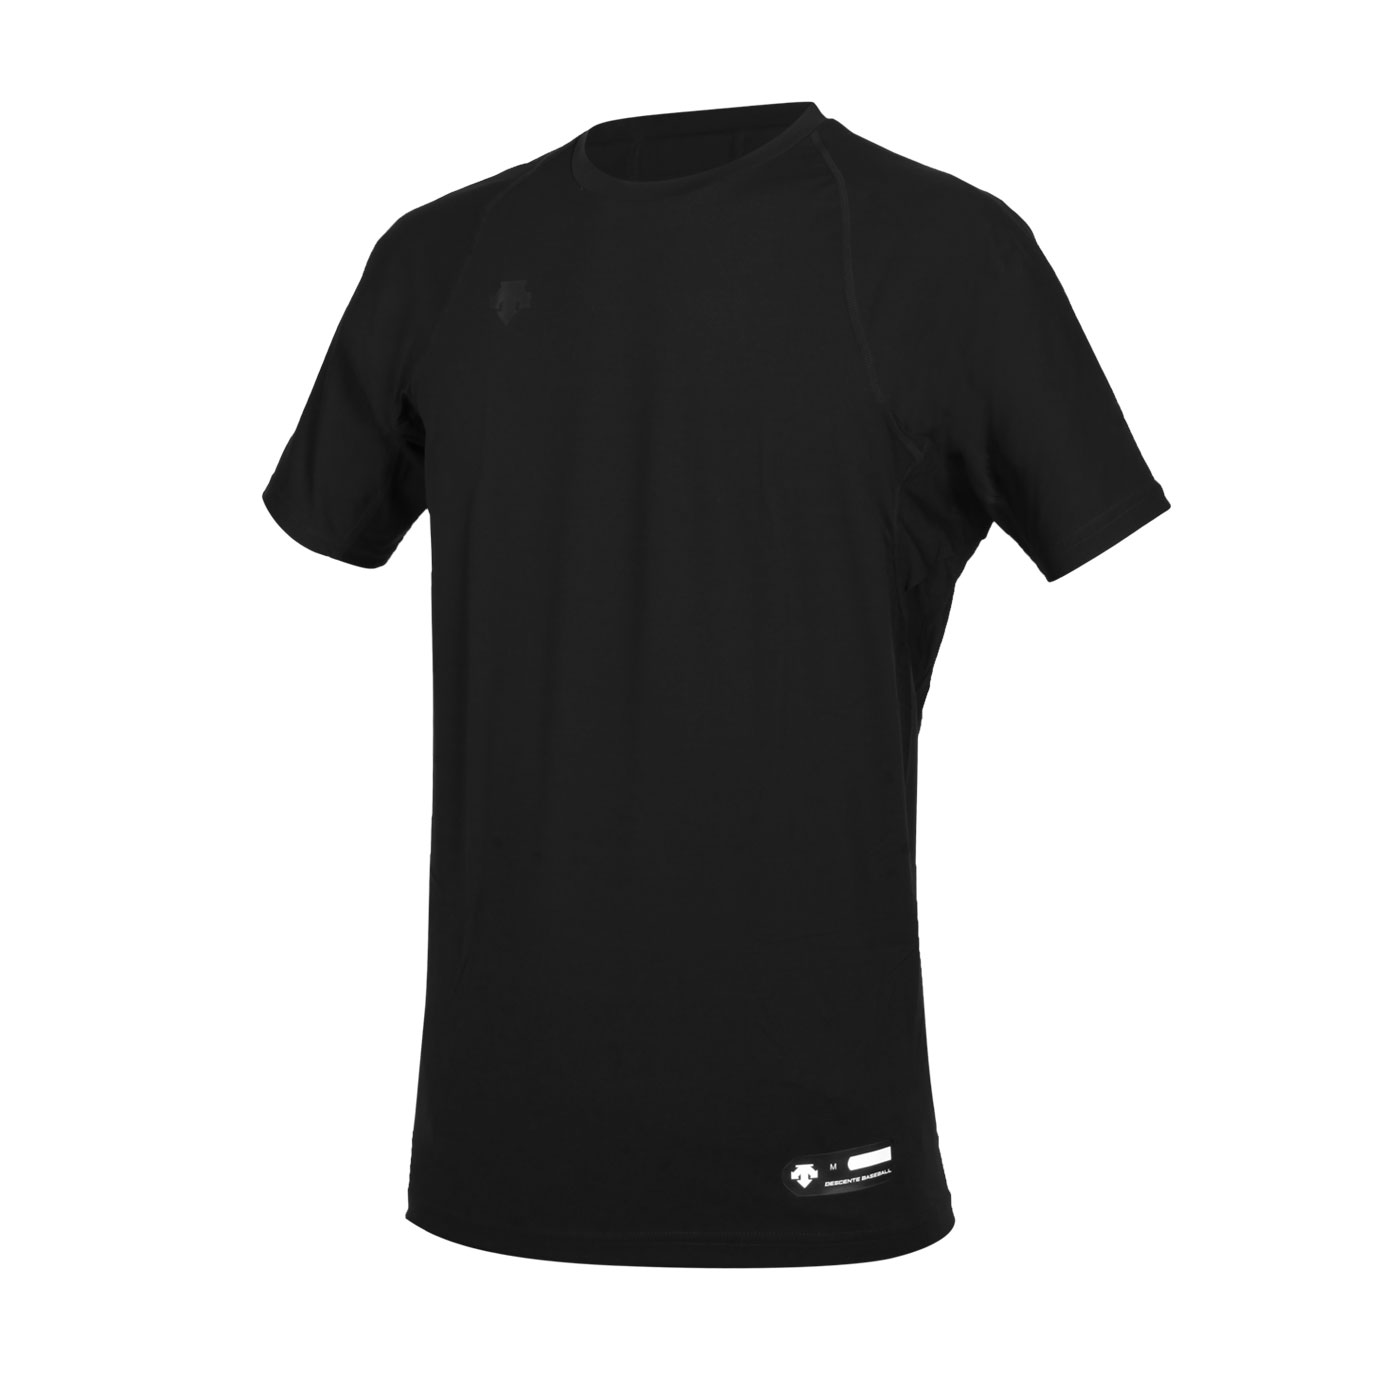 DESCENTE 男款圓領短袖T恤 STD-721T-BLK - 黑